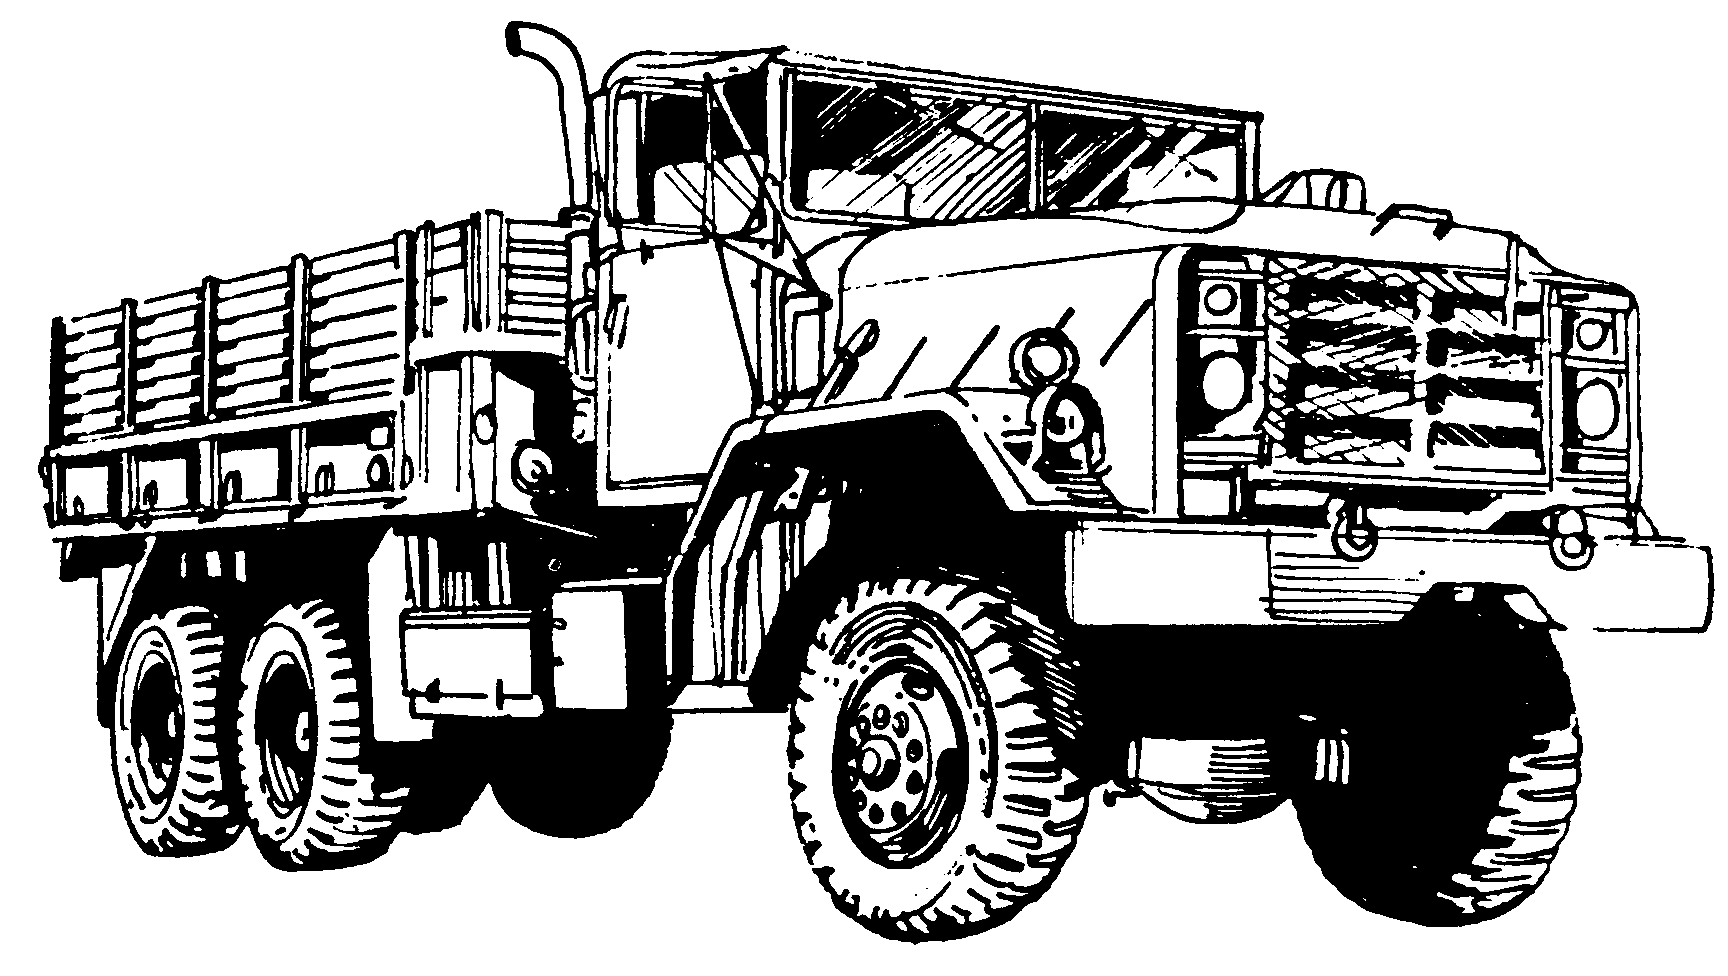       Trucker Trucking Cartoon 63 A Cartoon Image And Funny Joke In The